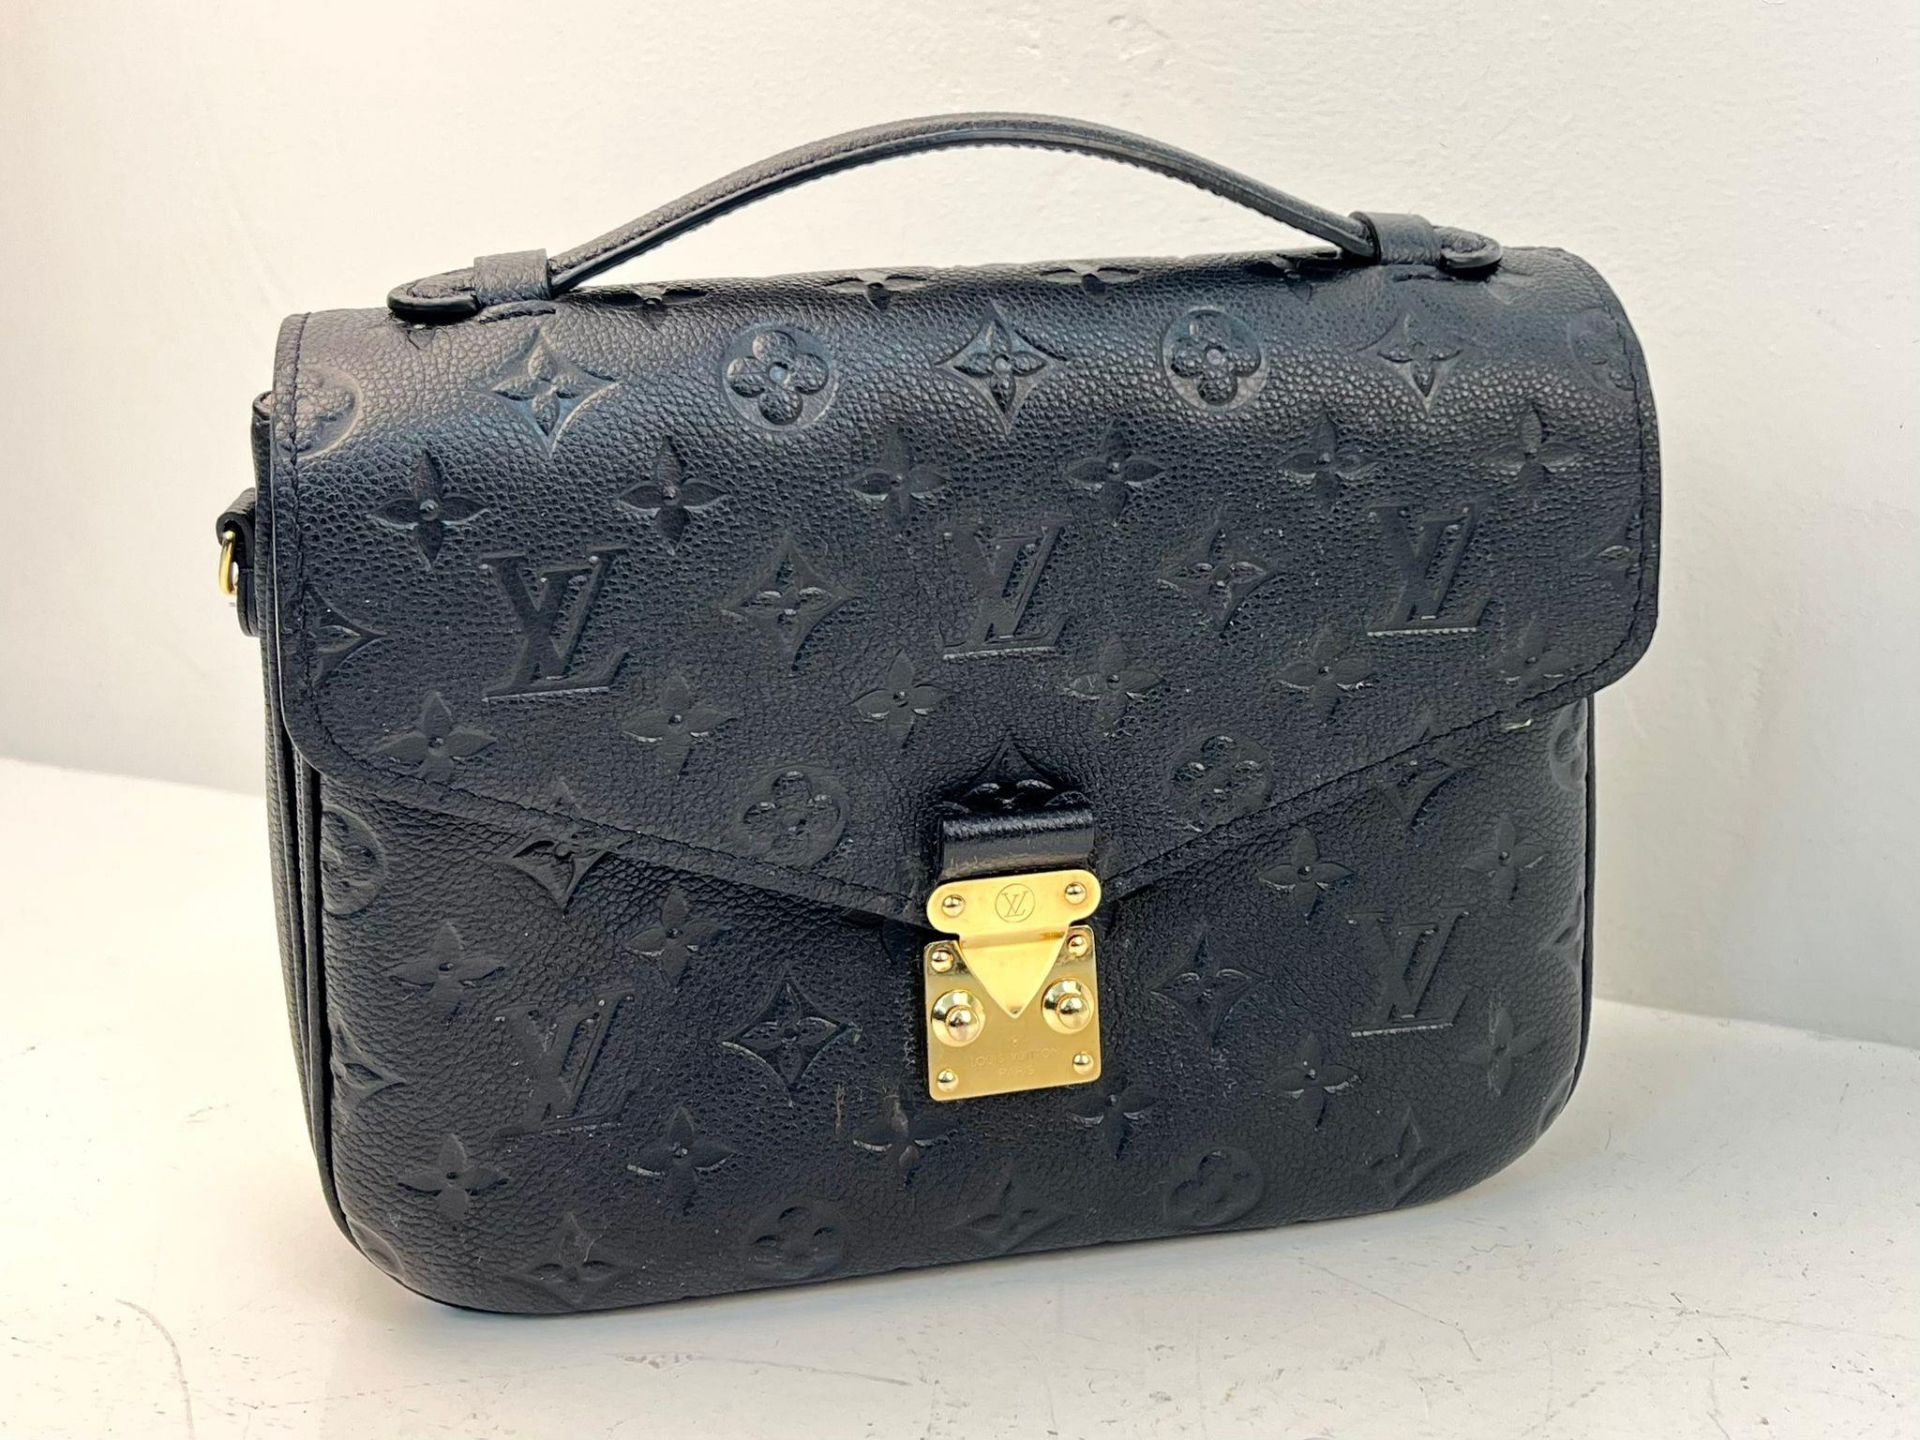 A Louis Vuitton Pochette Metis Leather Bag. Black monogram empreinte leather. Zipped exterior